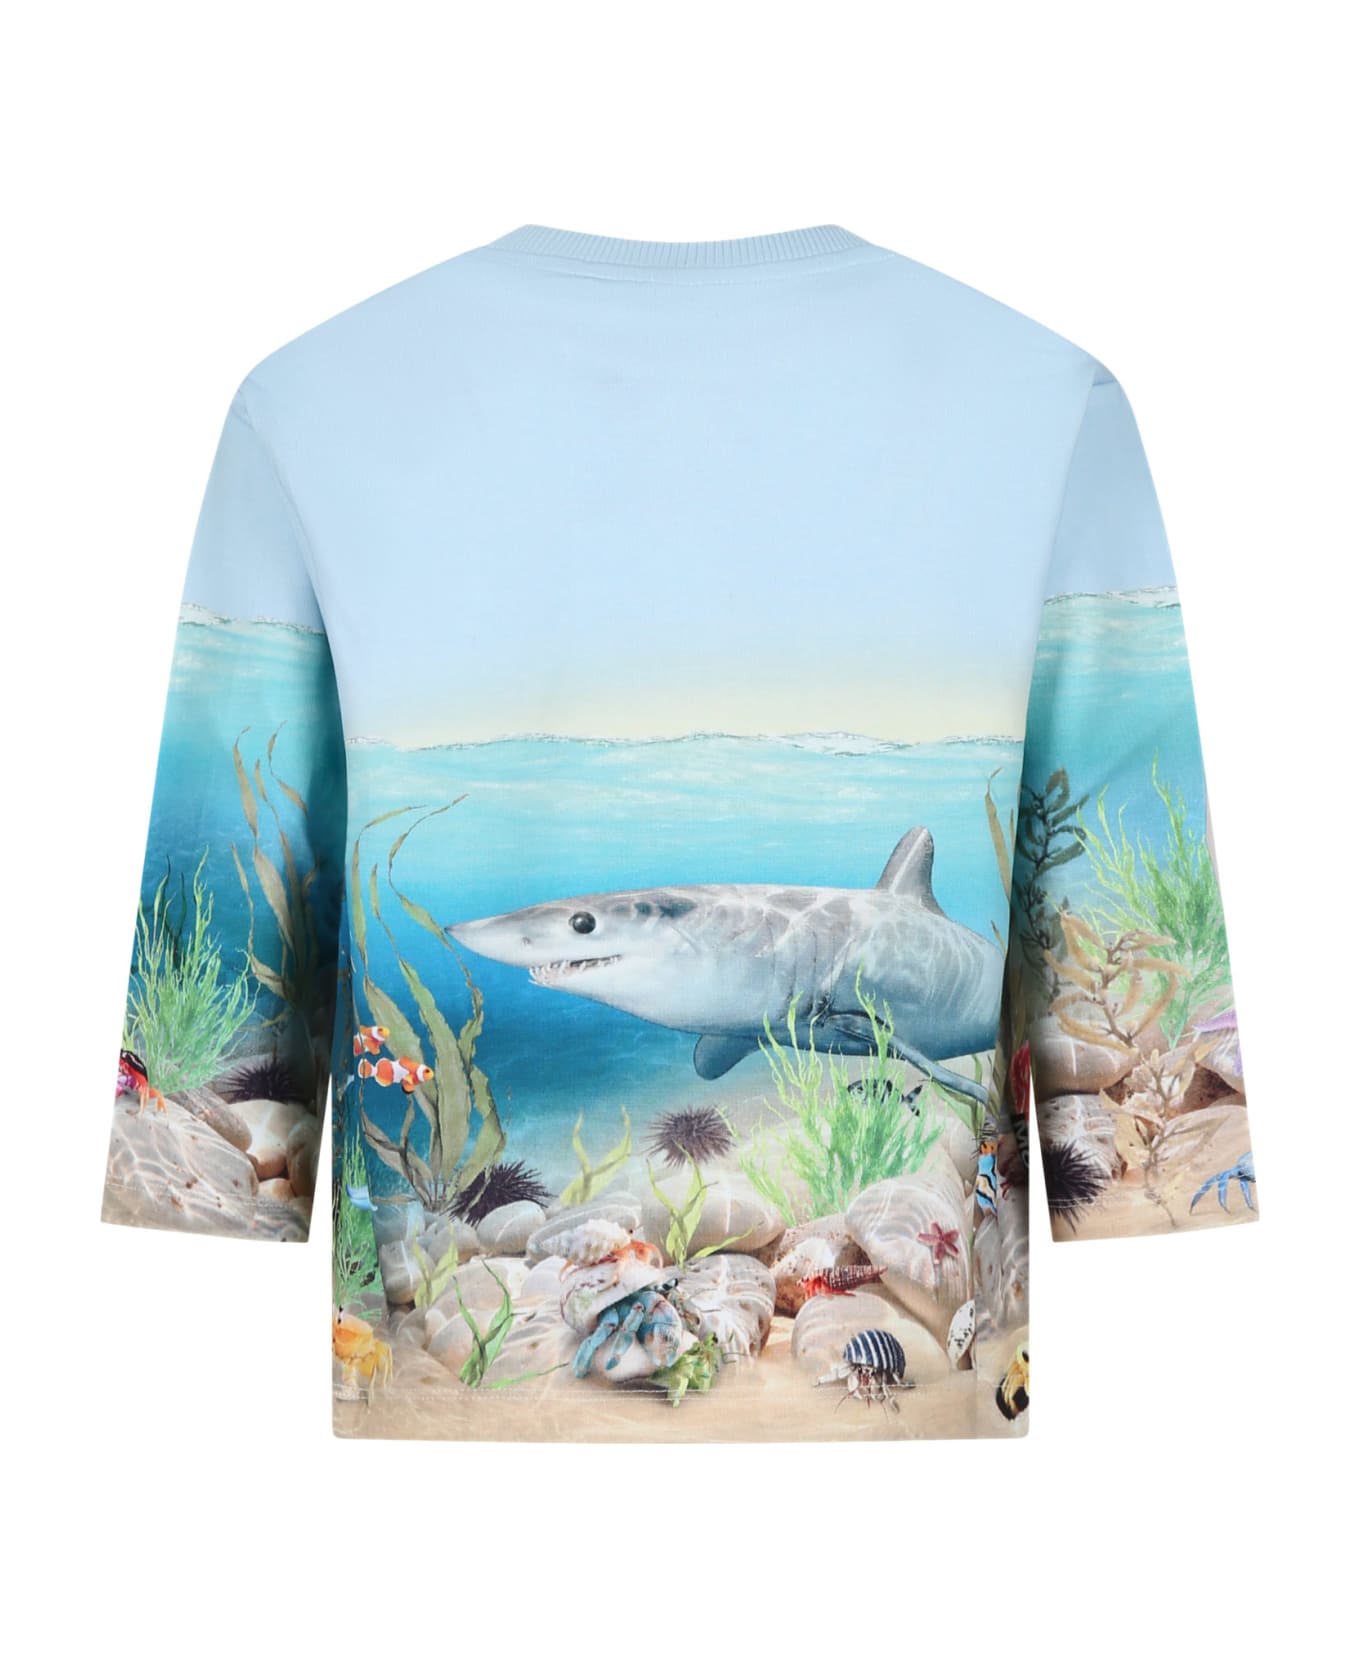 Molo Light Blue Sweatshirt For Boy With Shark Print - Light Blue